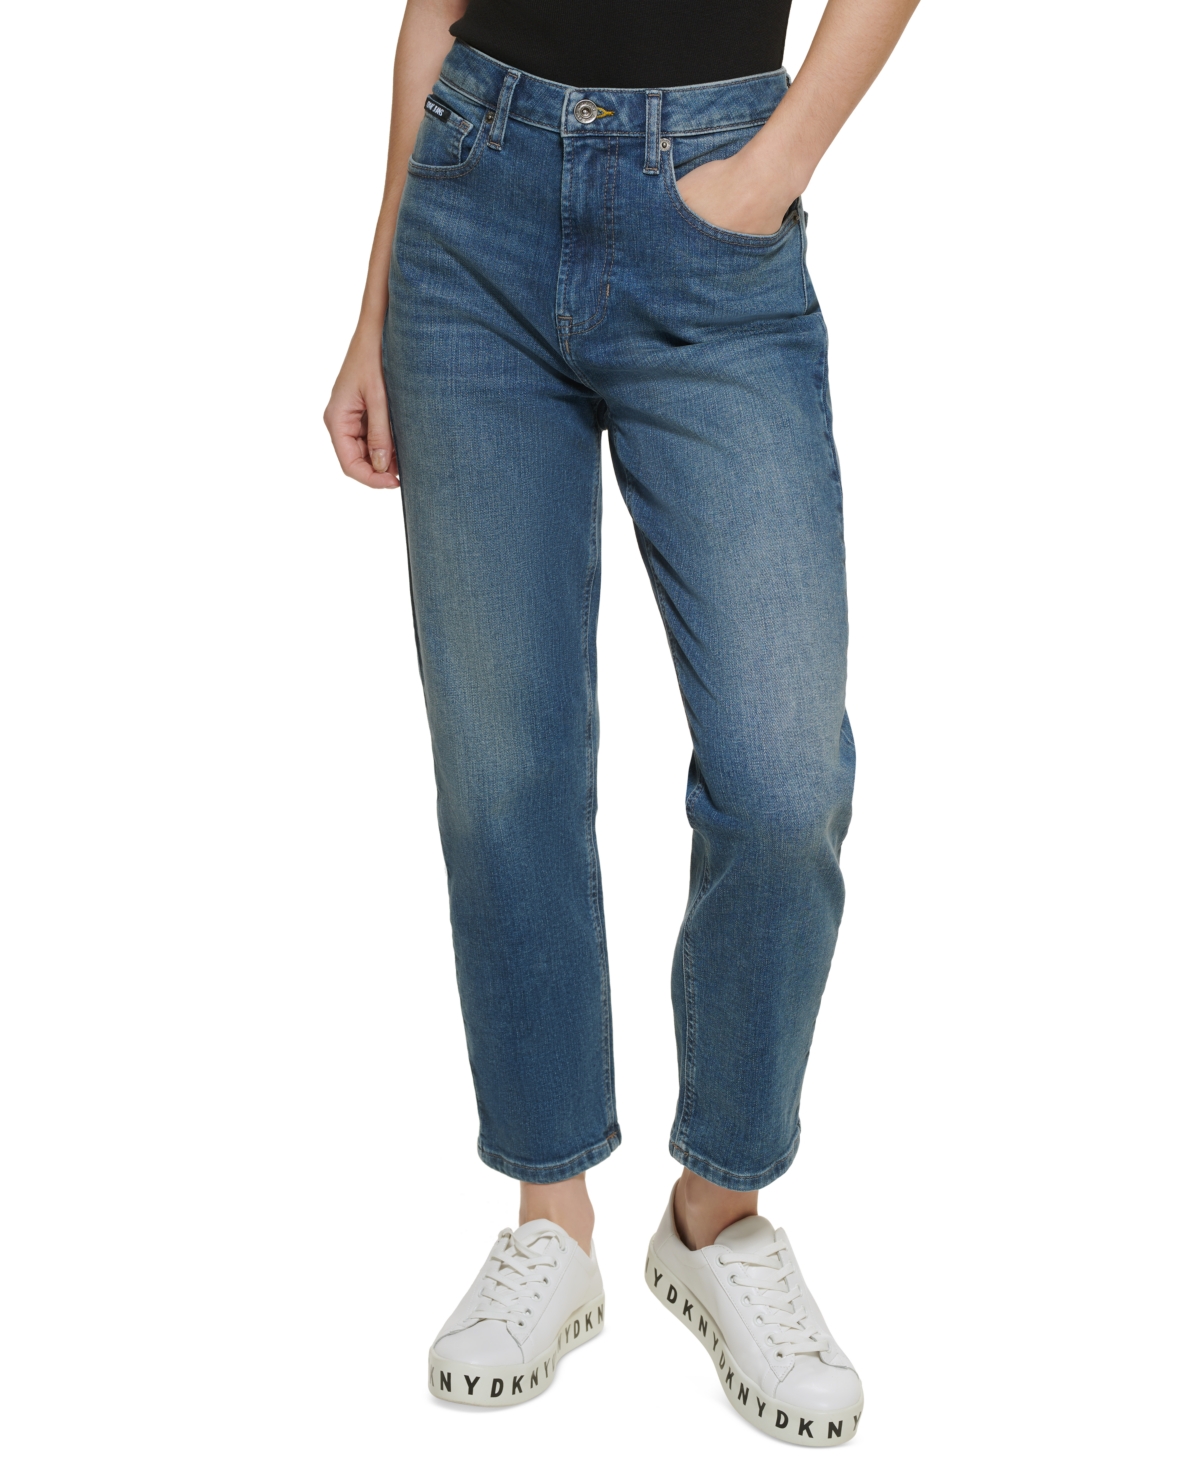  Dkny Jeans Waverly Straight-Leg Jeans